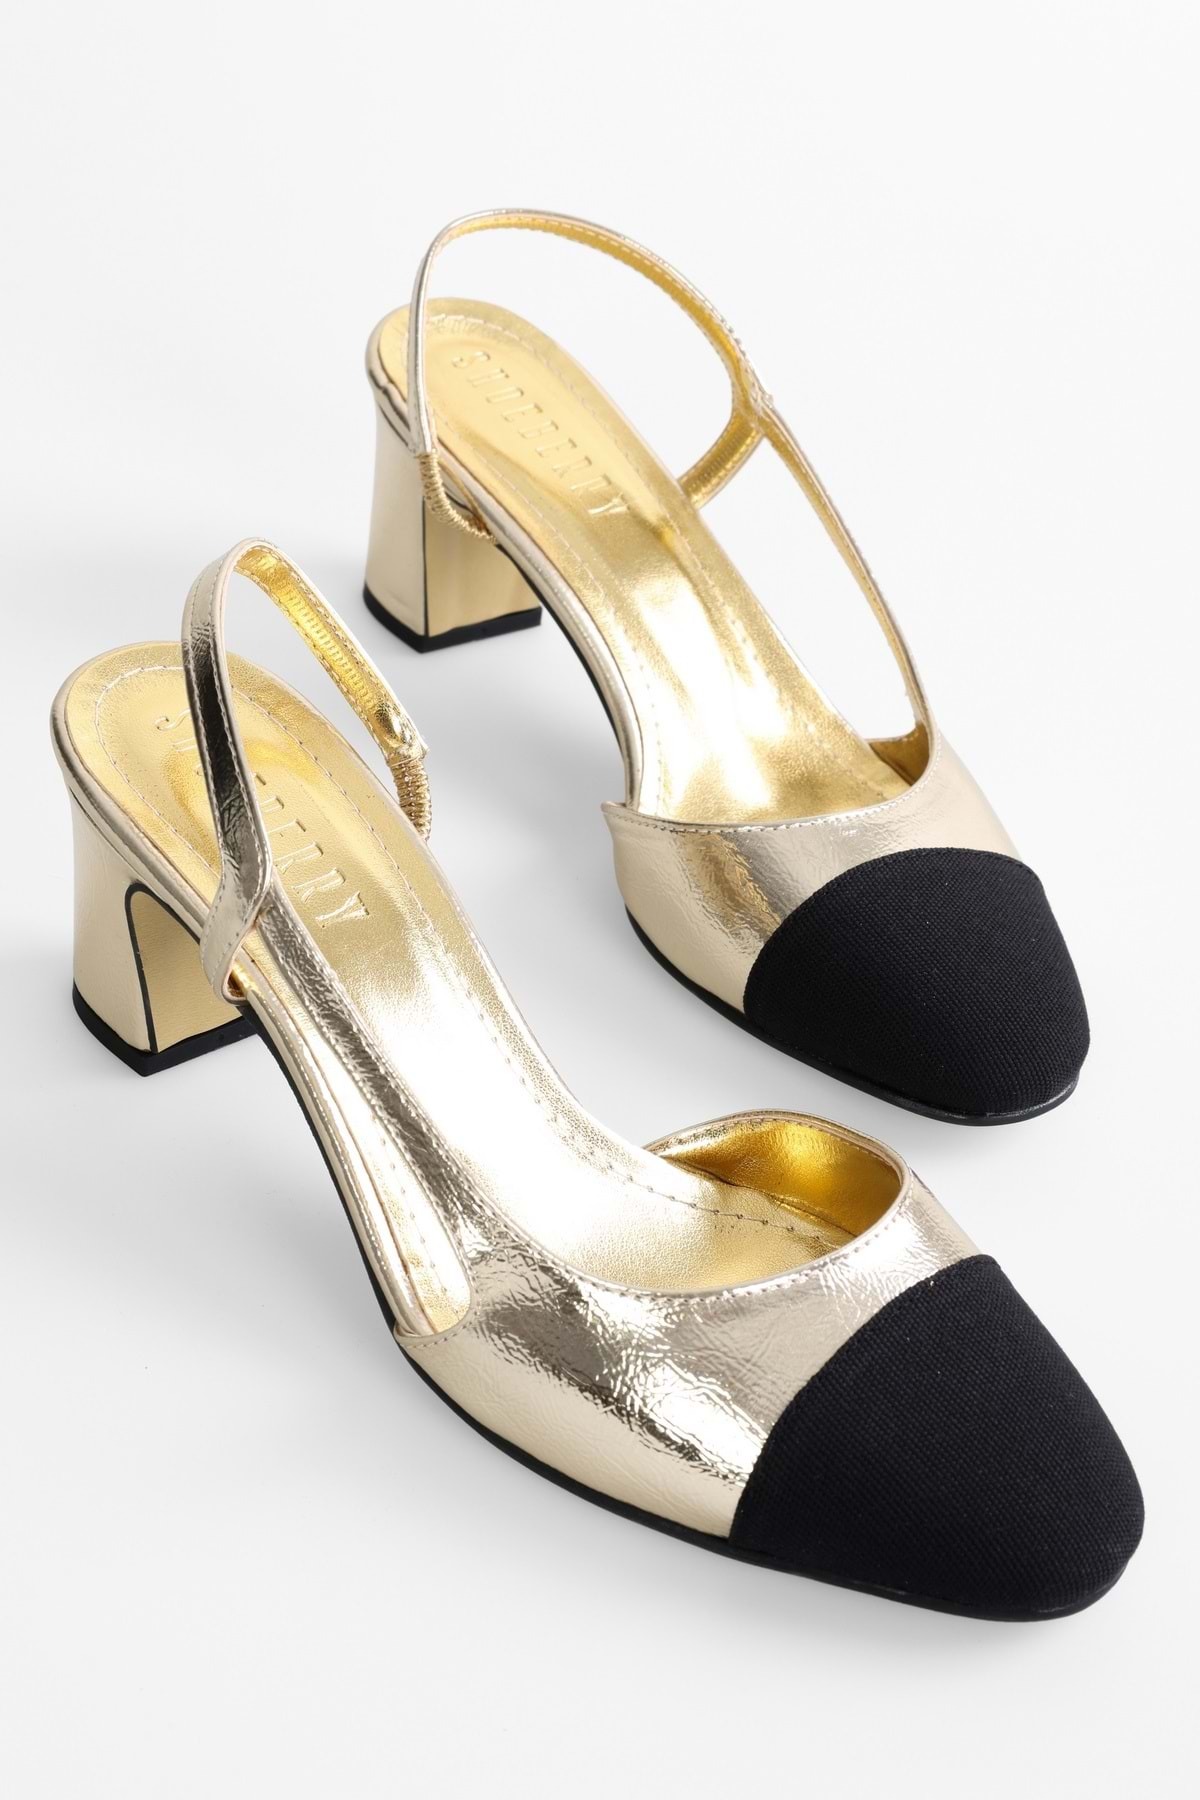 Shoeberry Women's Liera Gold Shiny Heeled Shoes